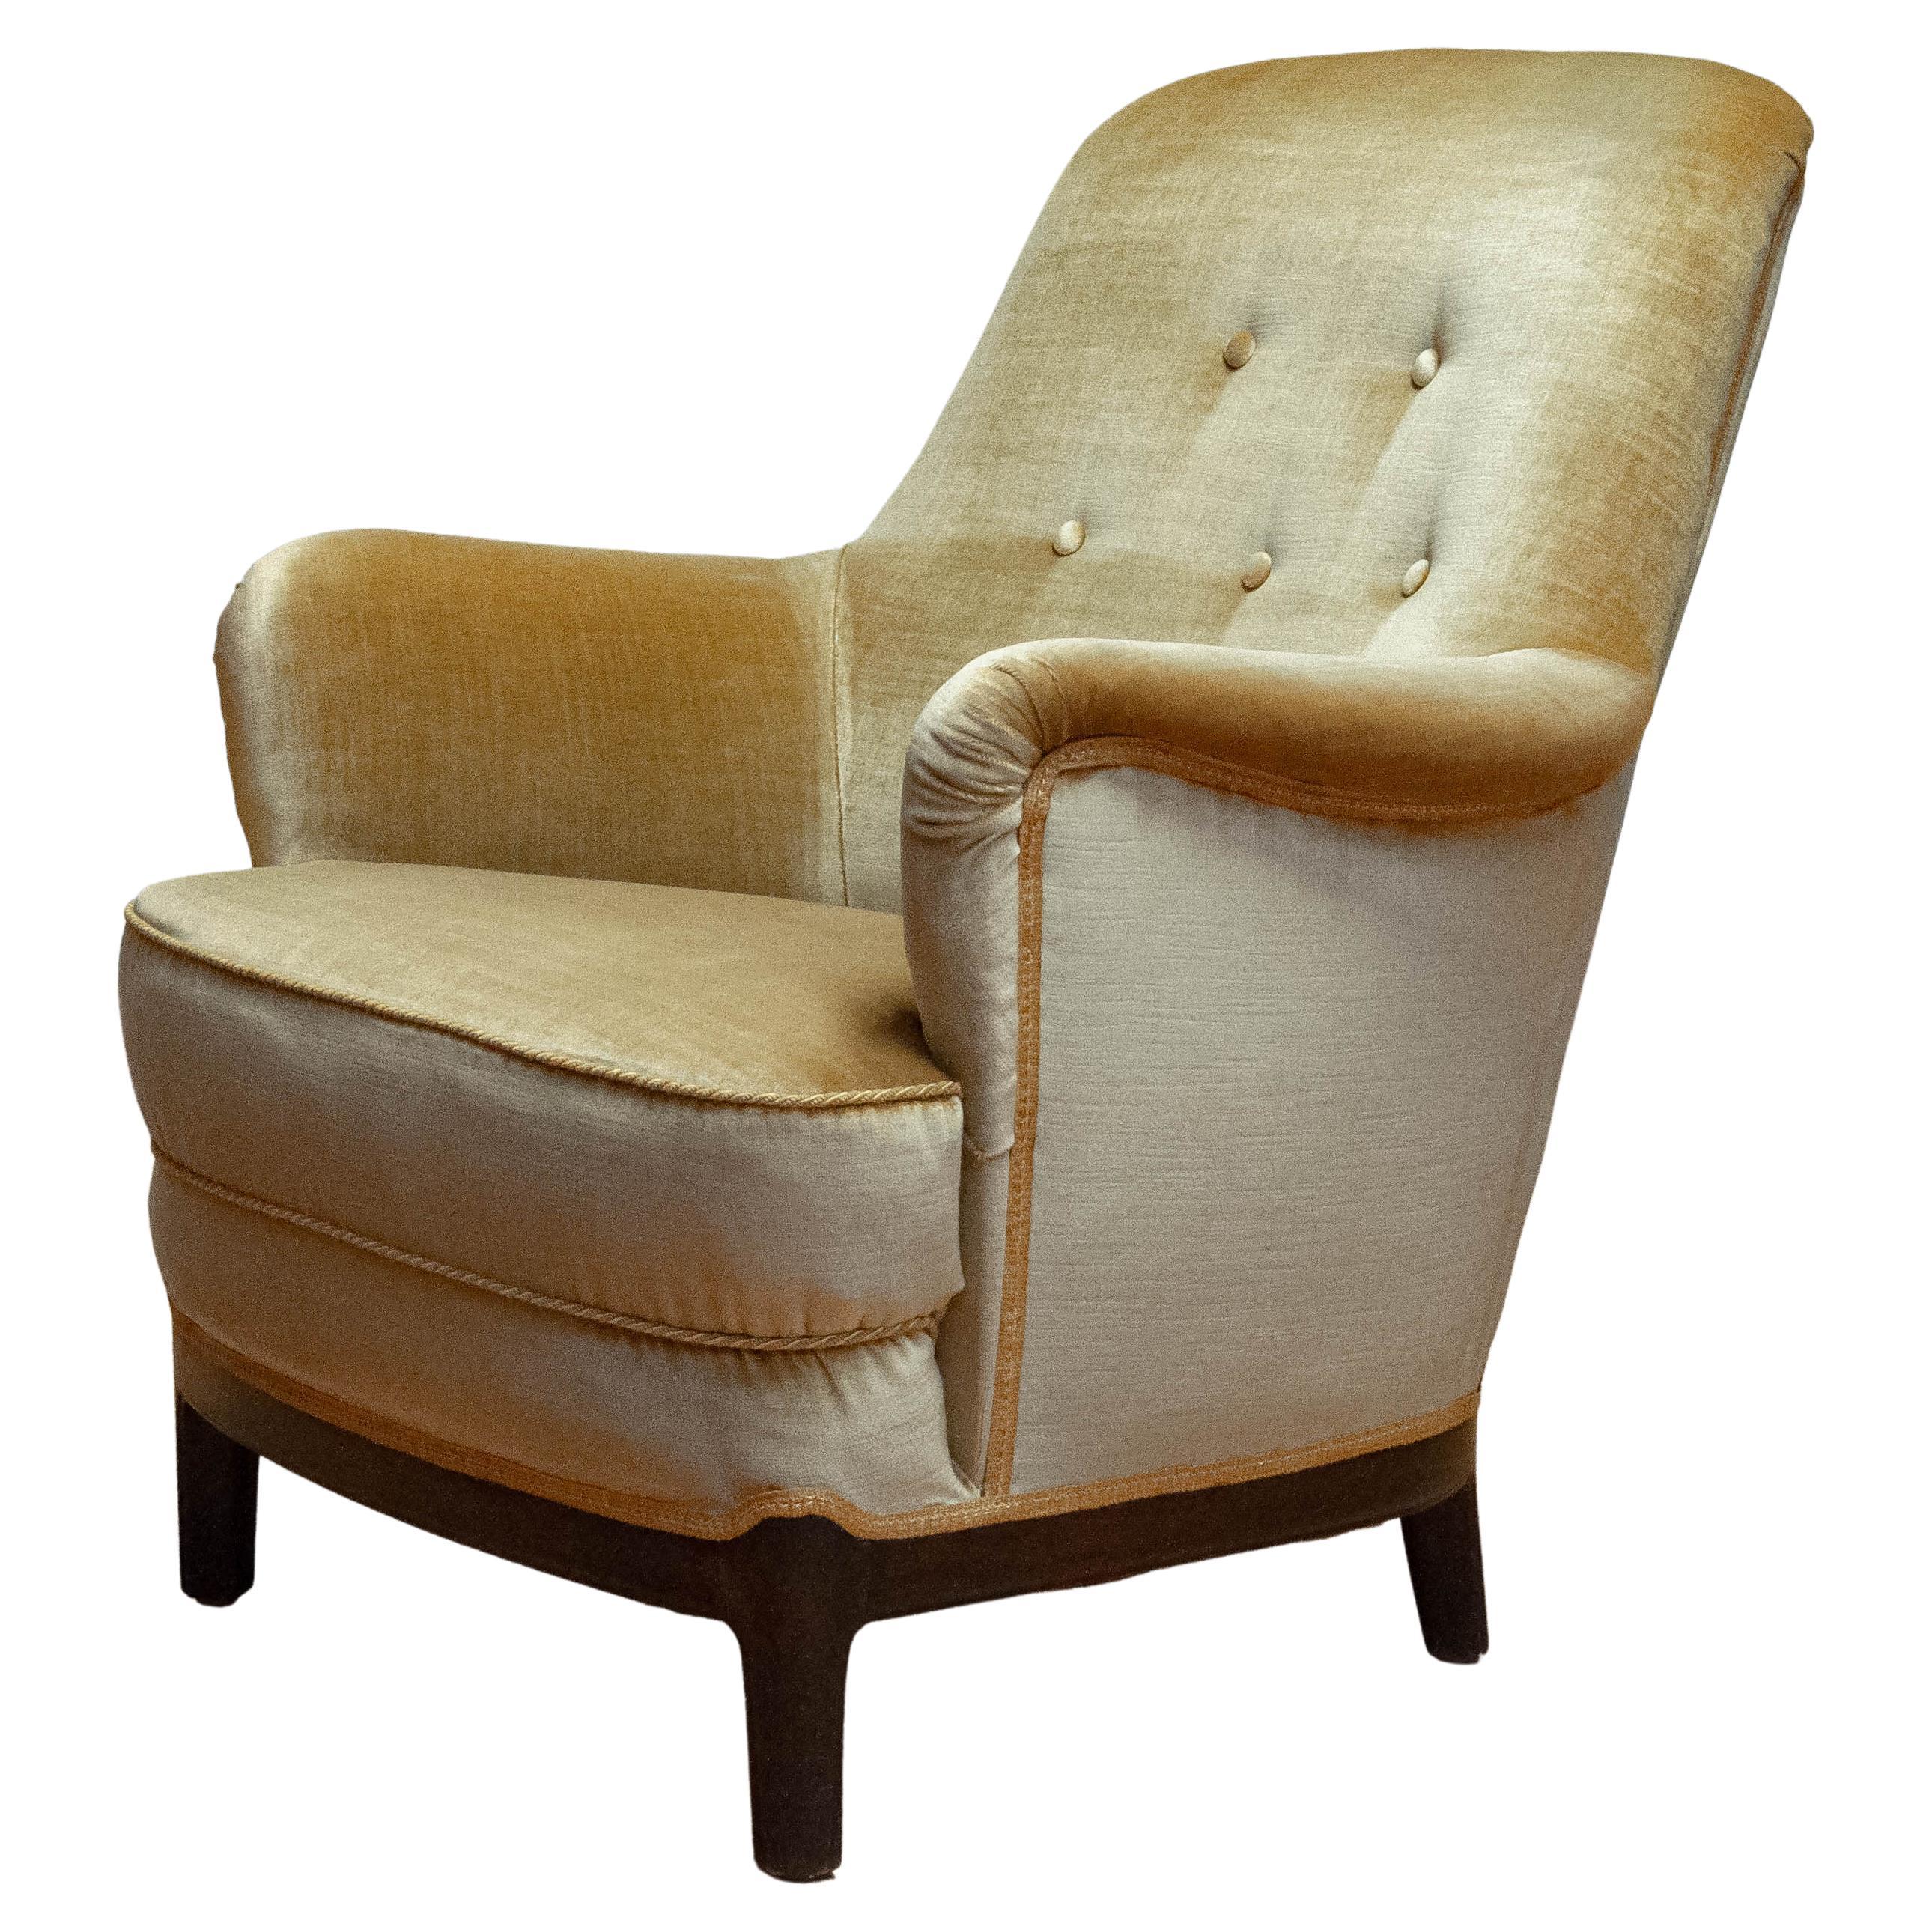 1940s Gold Colored Velvet Upholstered Lounge Chair By Carl Malmsten Sweden For Sale